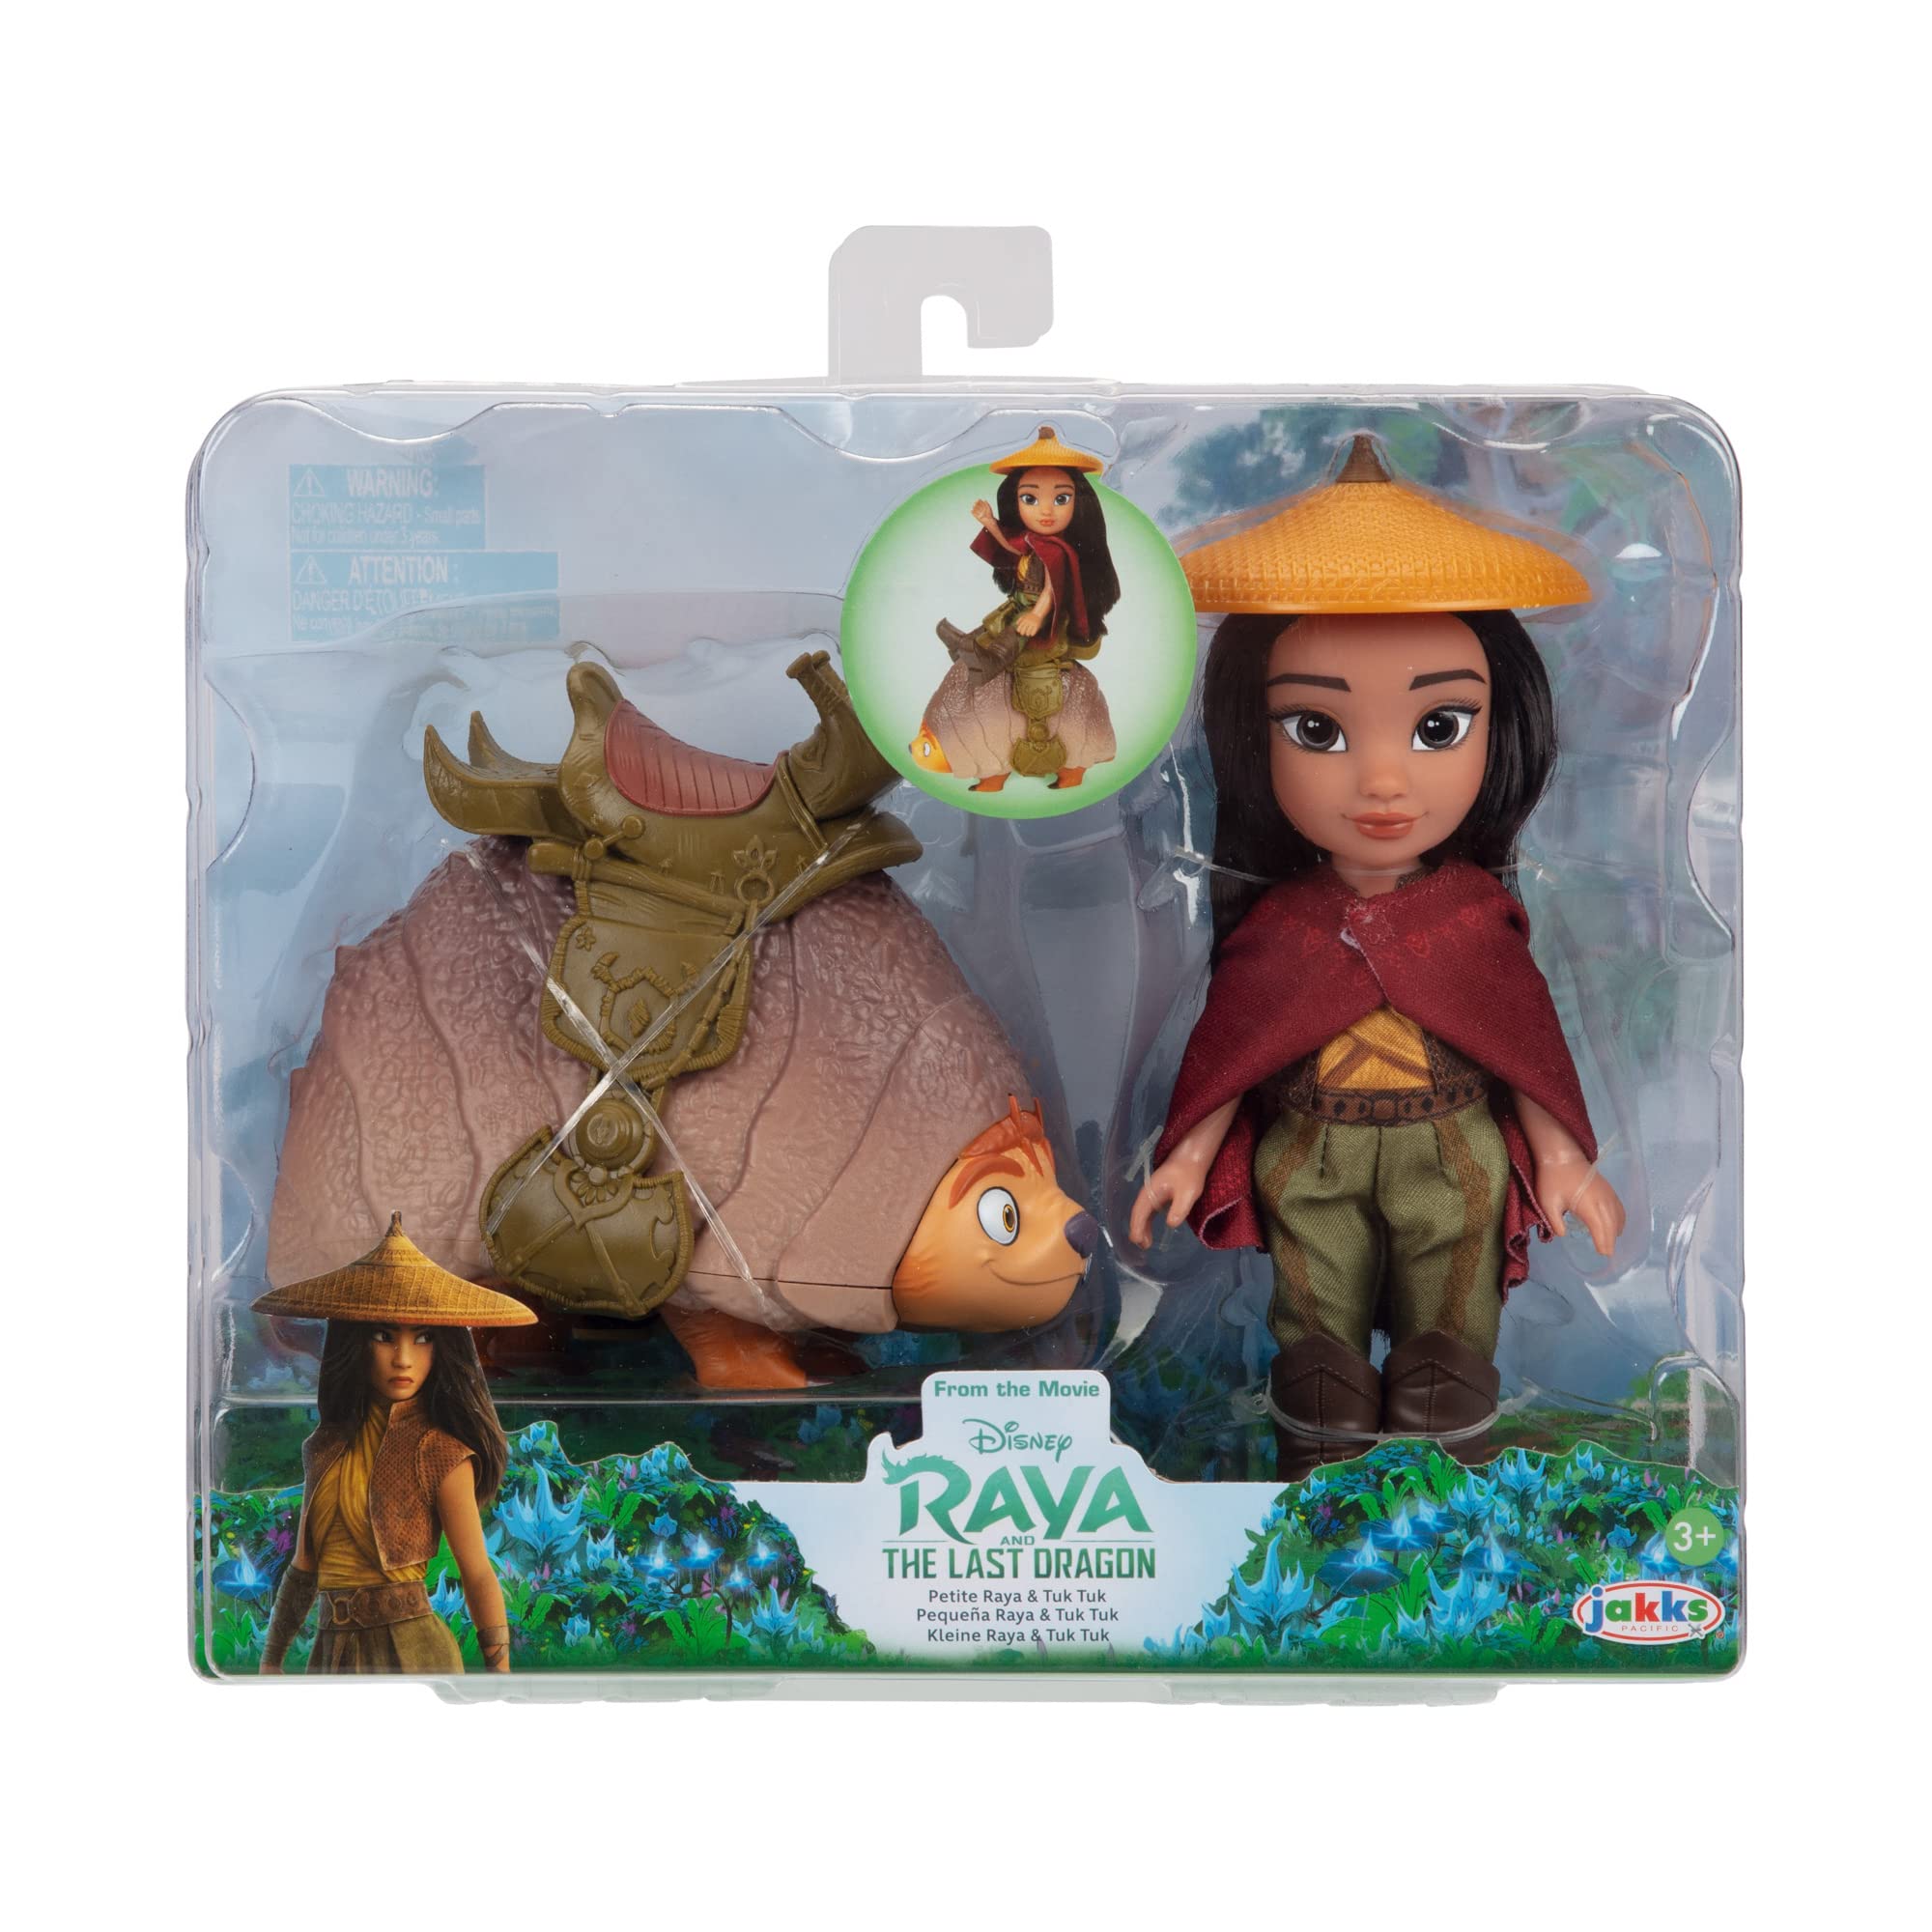 Disney Raya and The Last Dragon Petite Raya Doll & Tuk Tuk Toy Figure - Raya is 6 Inches Tall!